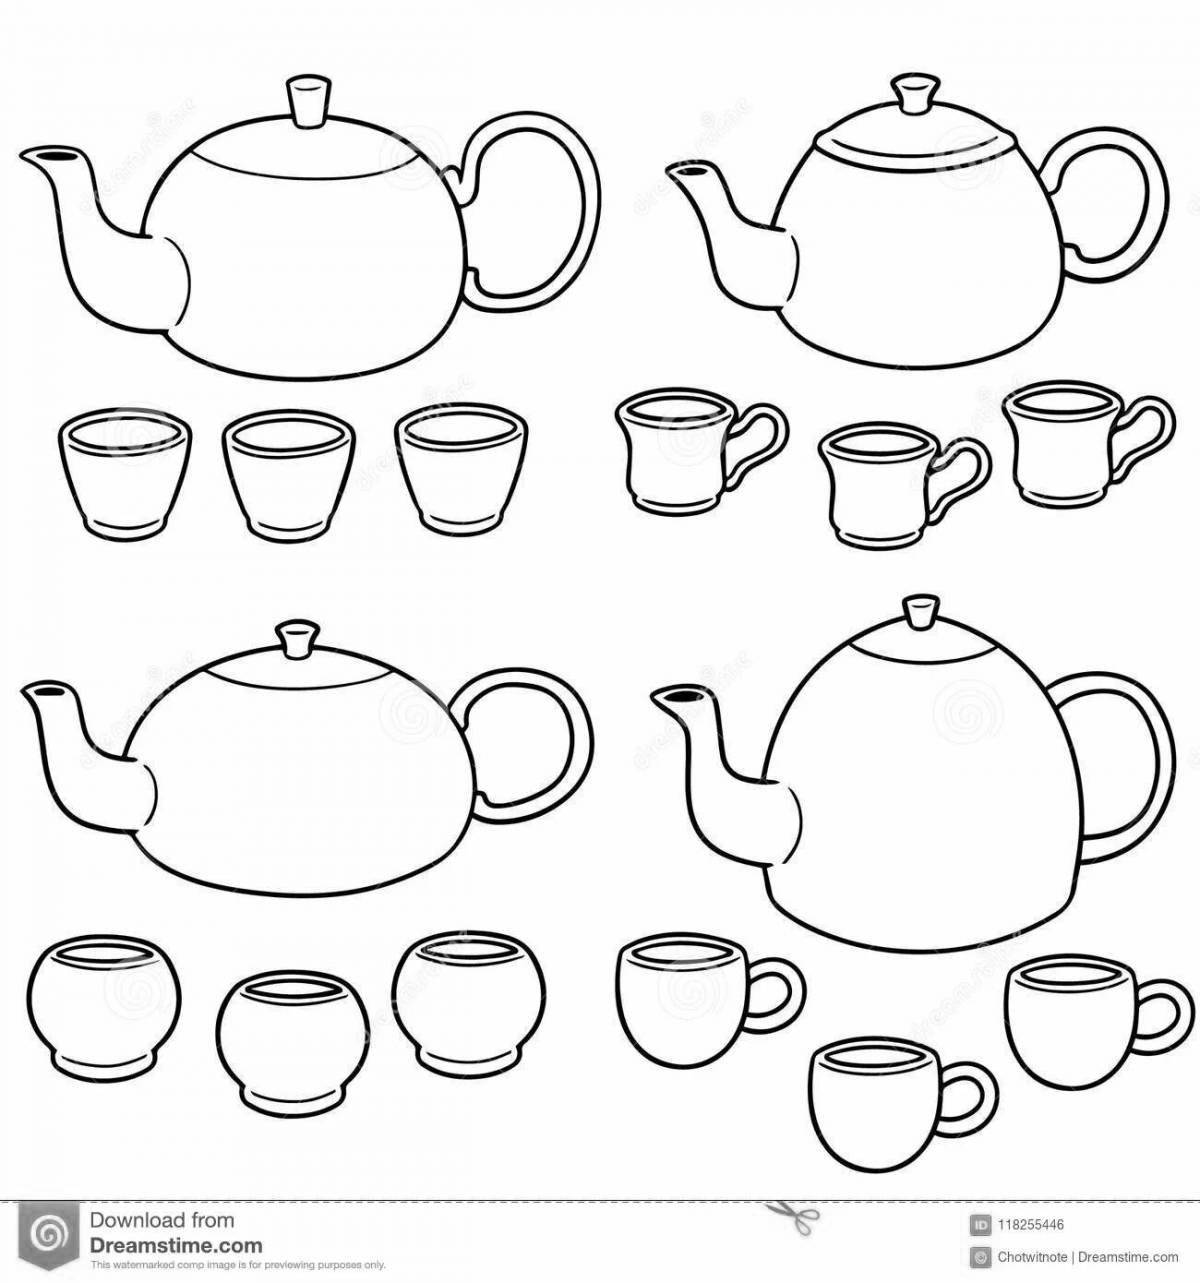 Kaleidoscopic tea set coloring page